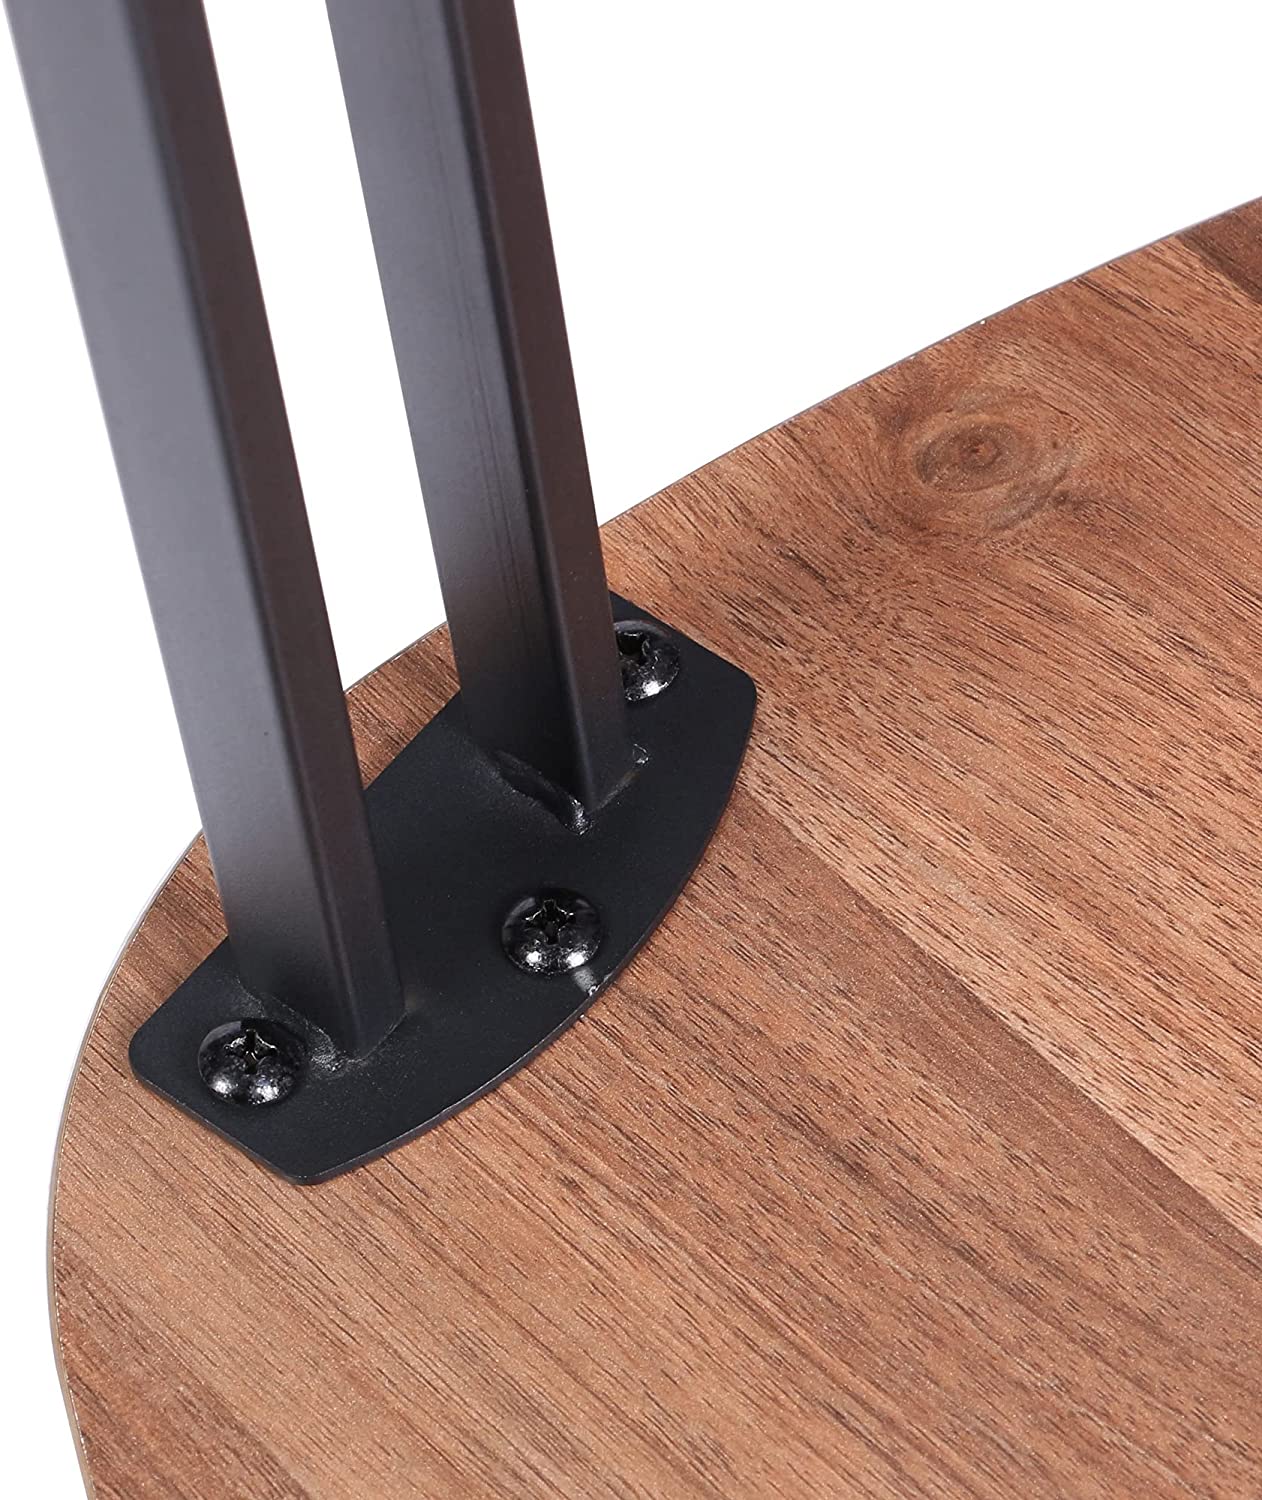 Set of Triangle Table Wood/Metal Coffee Living Room End Tea Nesting Tables Angled Legs